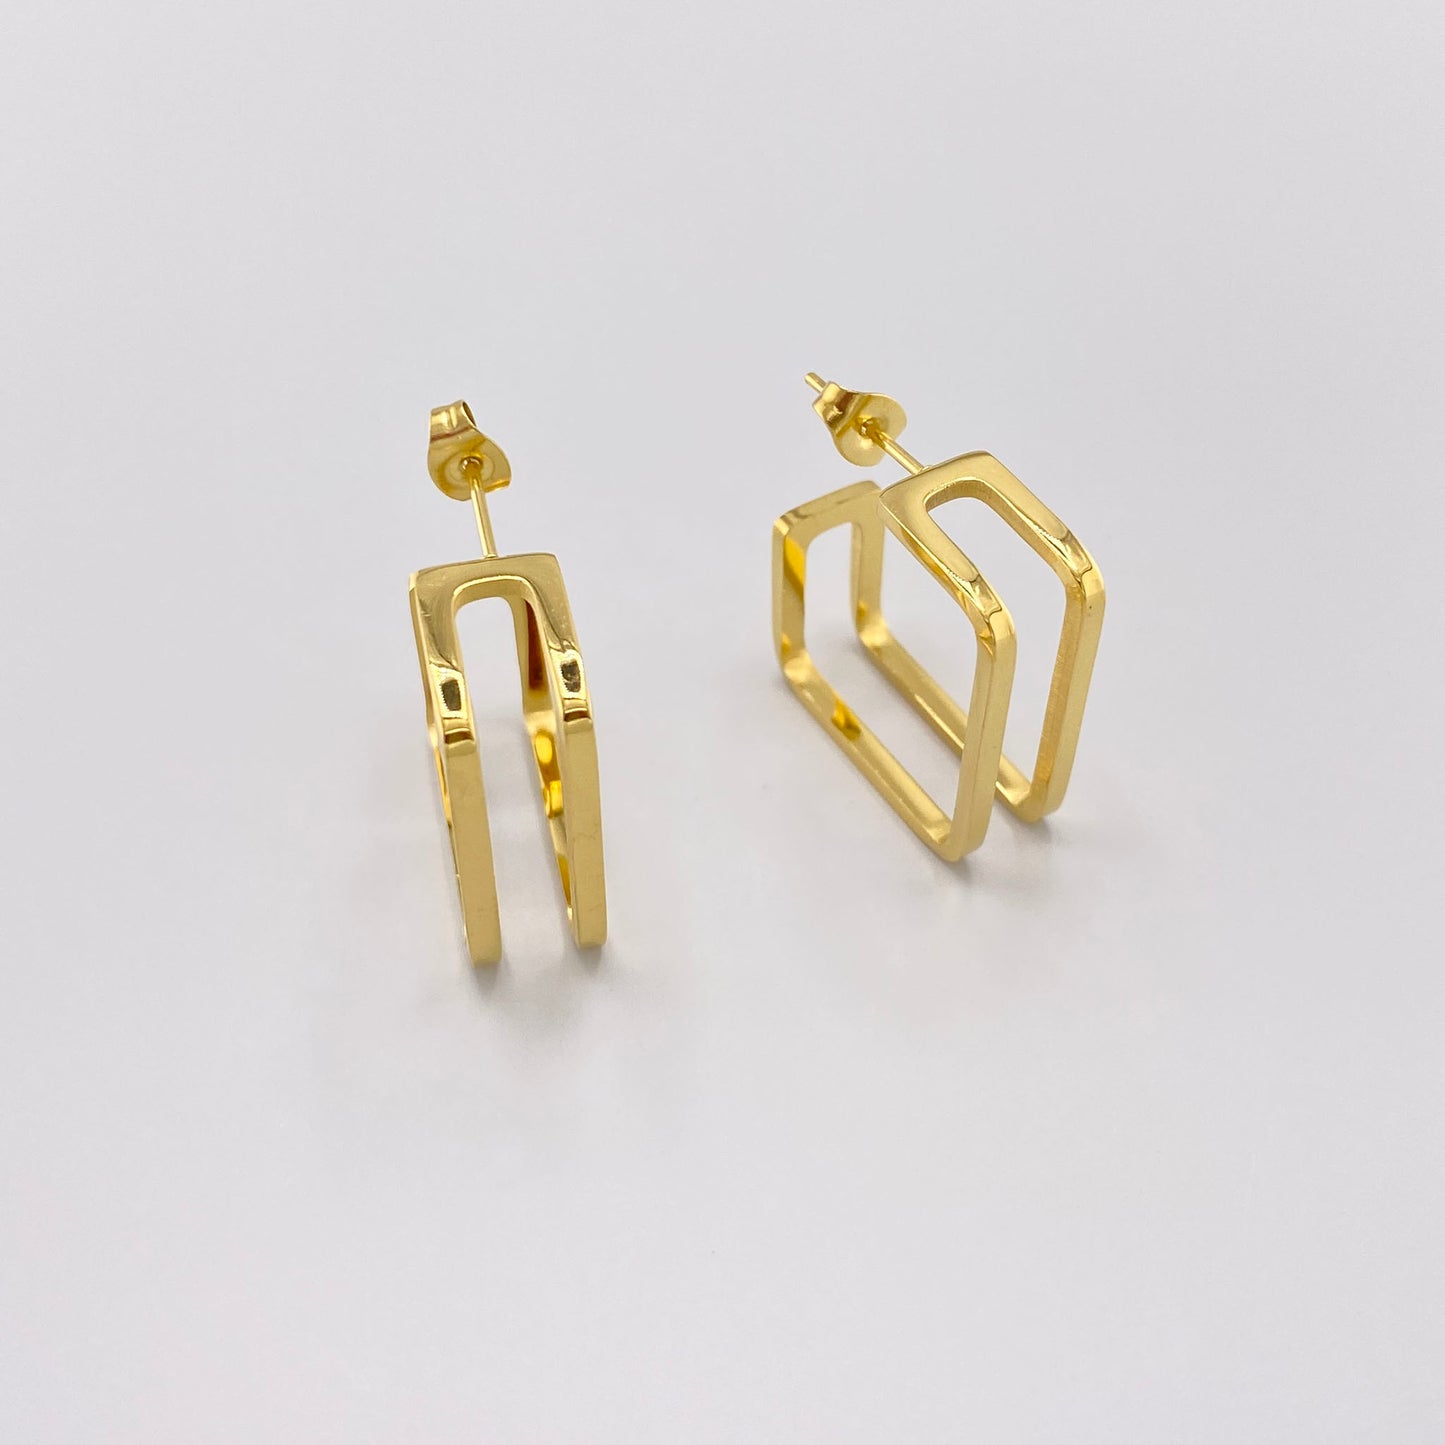 Square earrings